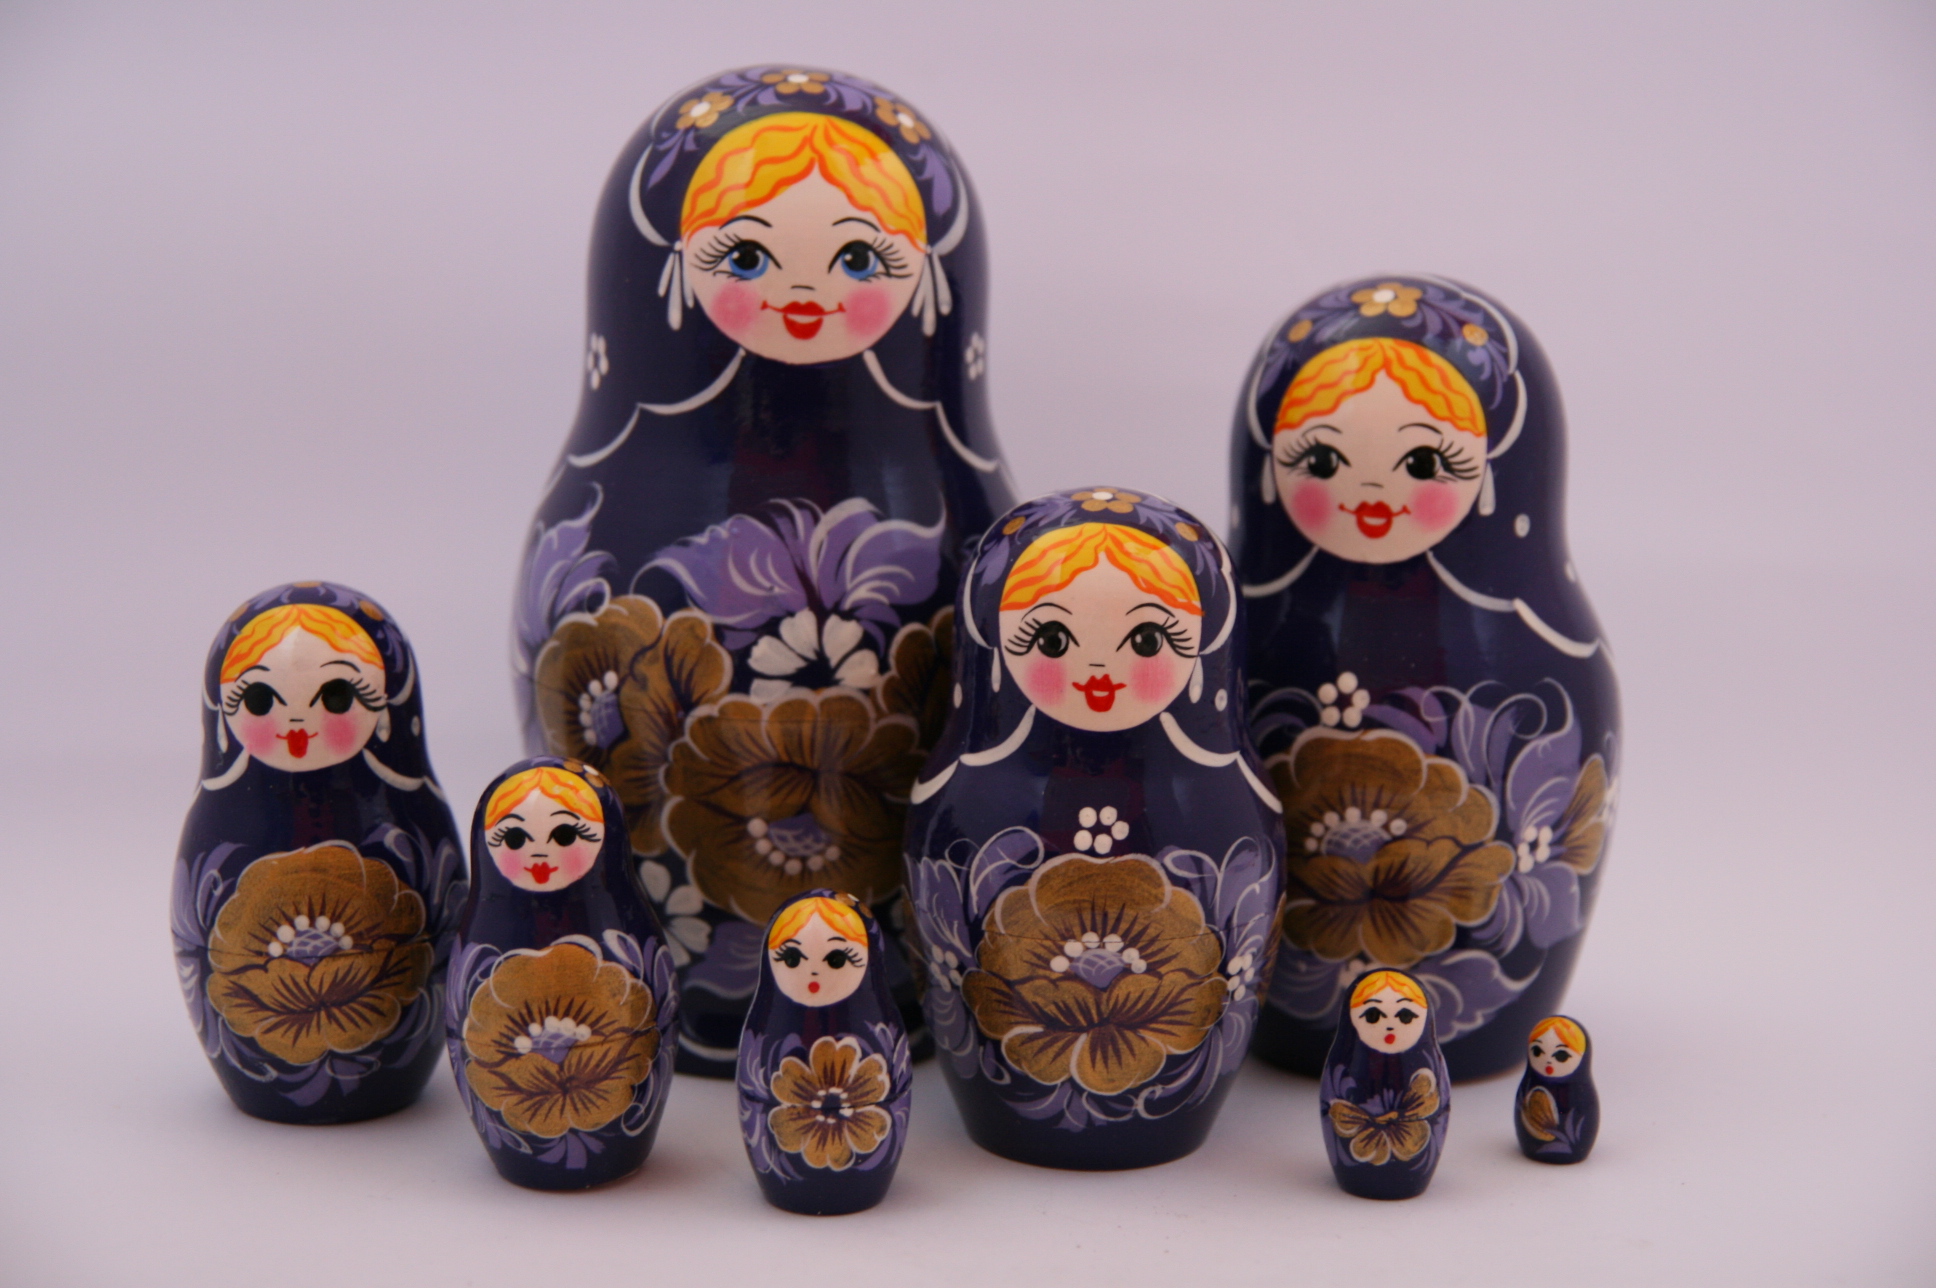 Russische Puppen der russischen Matrjoschka der Puppen 10pcs handcrafted 